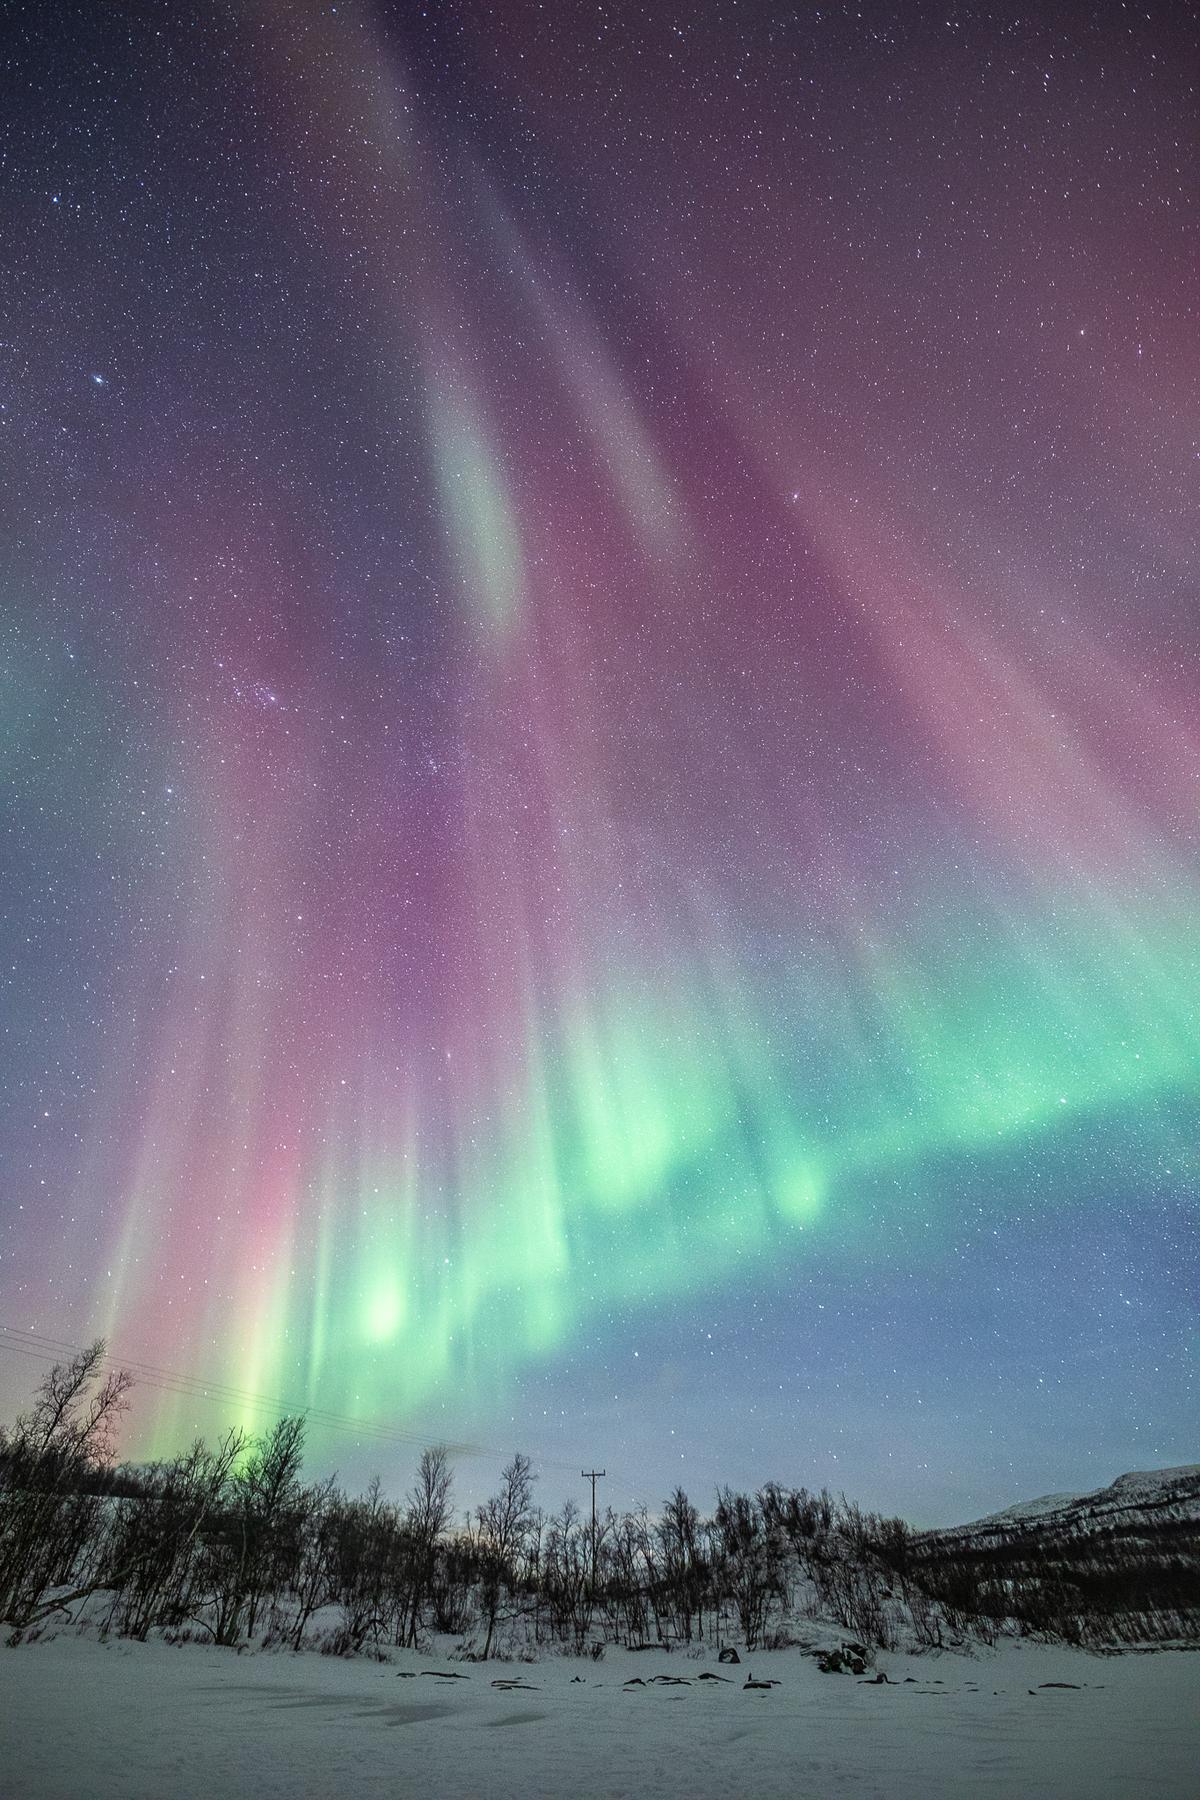 A spectacular light show in the night sky on Jan. 14, 2023. (Courtesy of <a href="https://www.facebook.com/greenlandertromso">Markus Varik</a>)